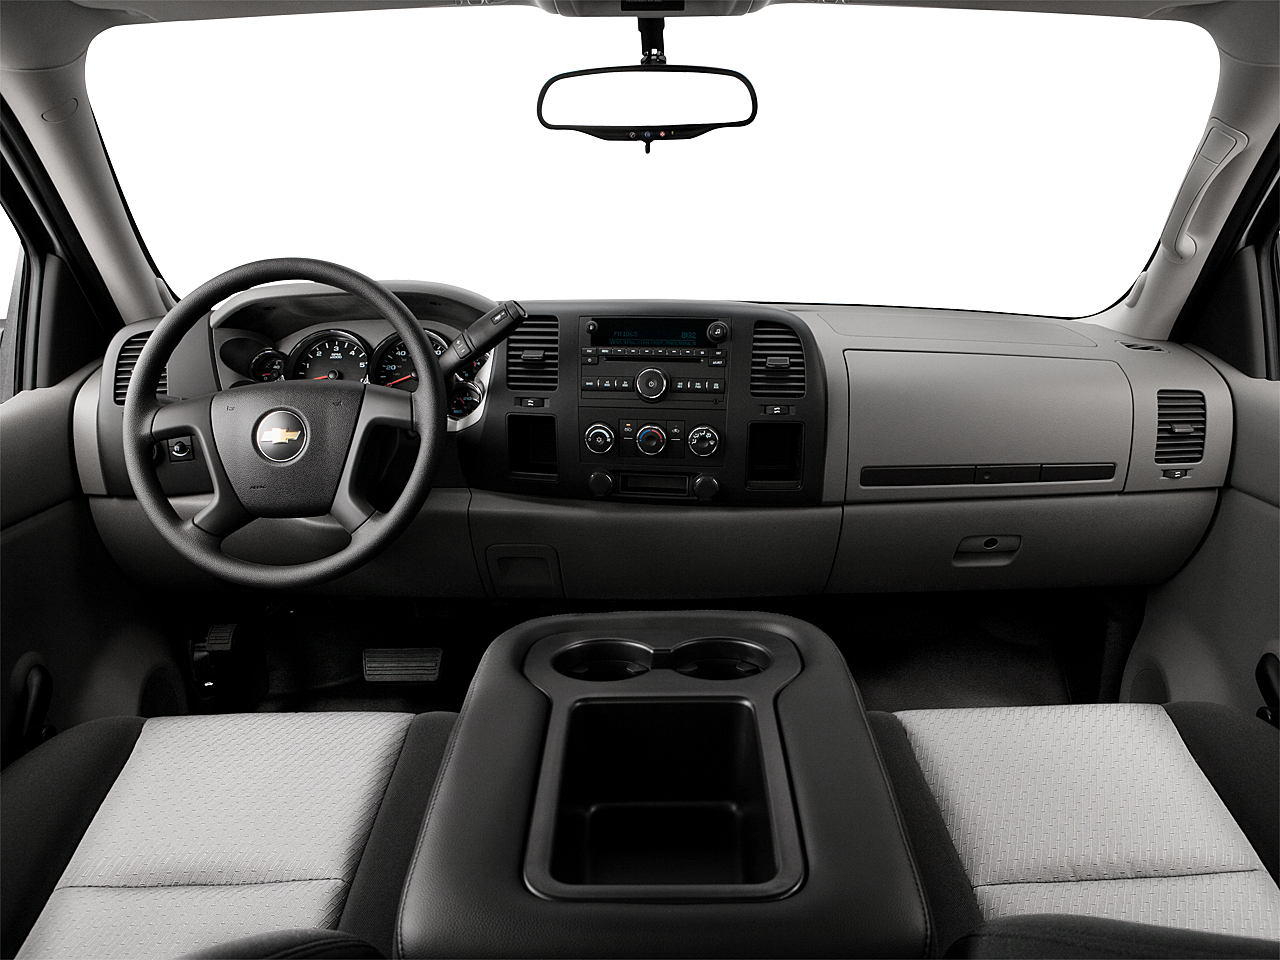 2008 Chevrolet Silverado 2500HD 4WD LTZ 4dr Extended Cab LB - Research -  GrooveCar